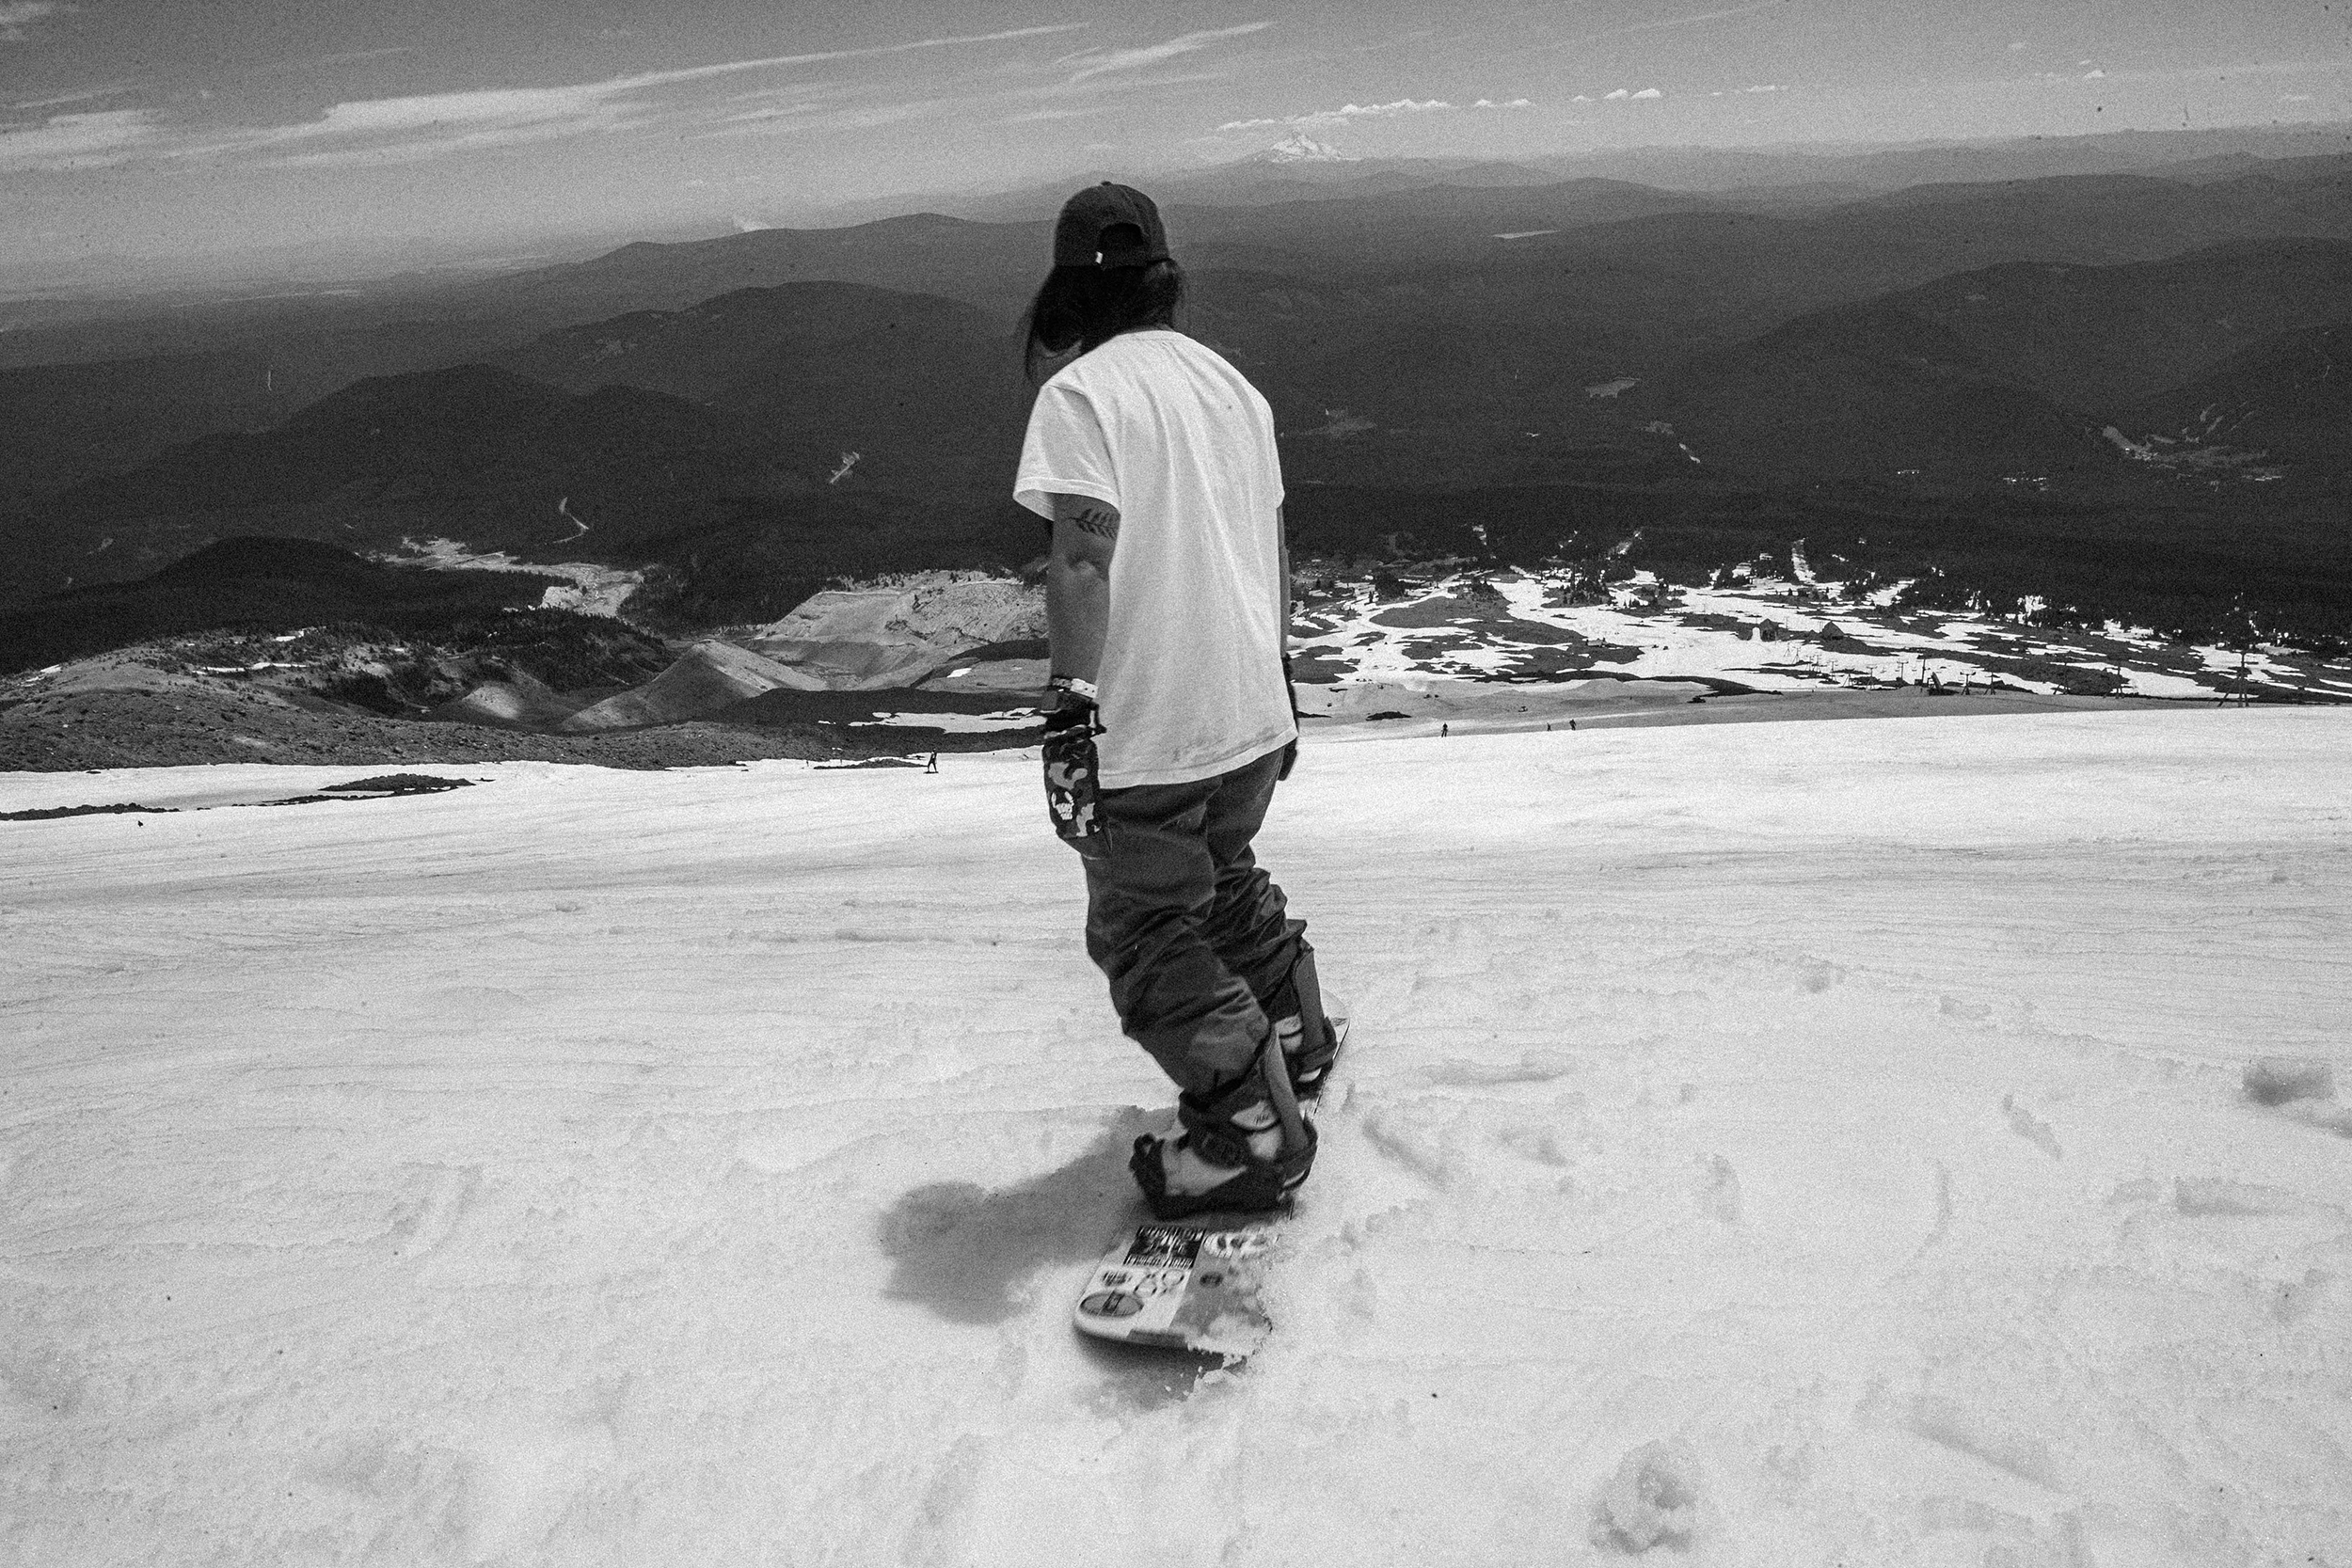 Nirvana Ortanez on a snowboard